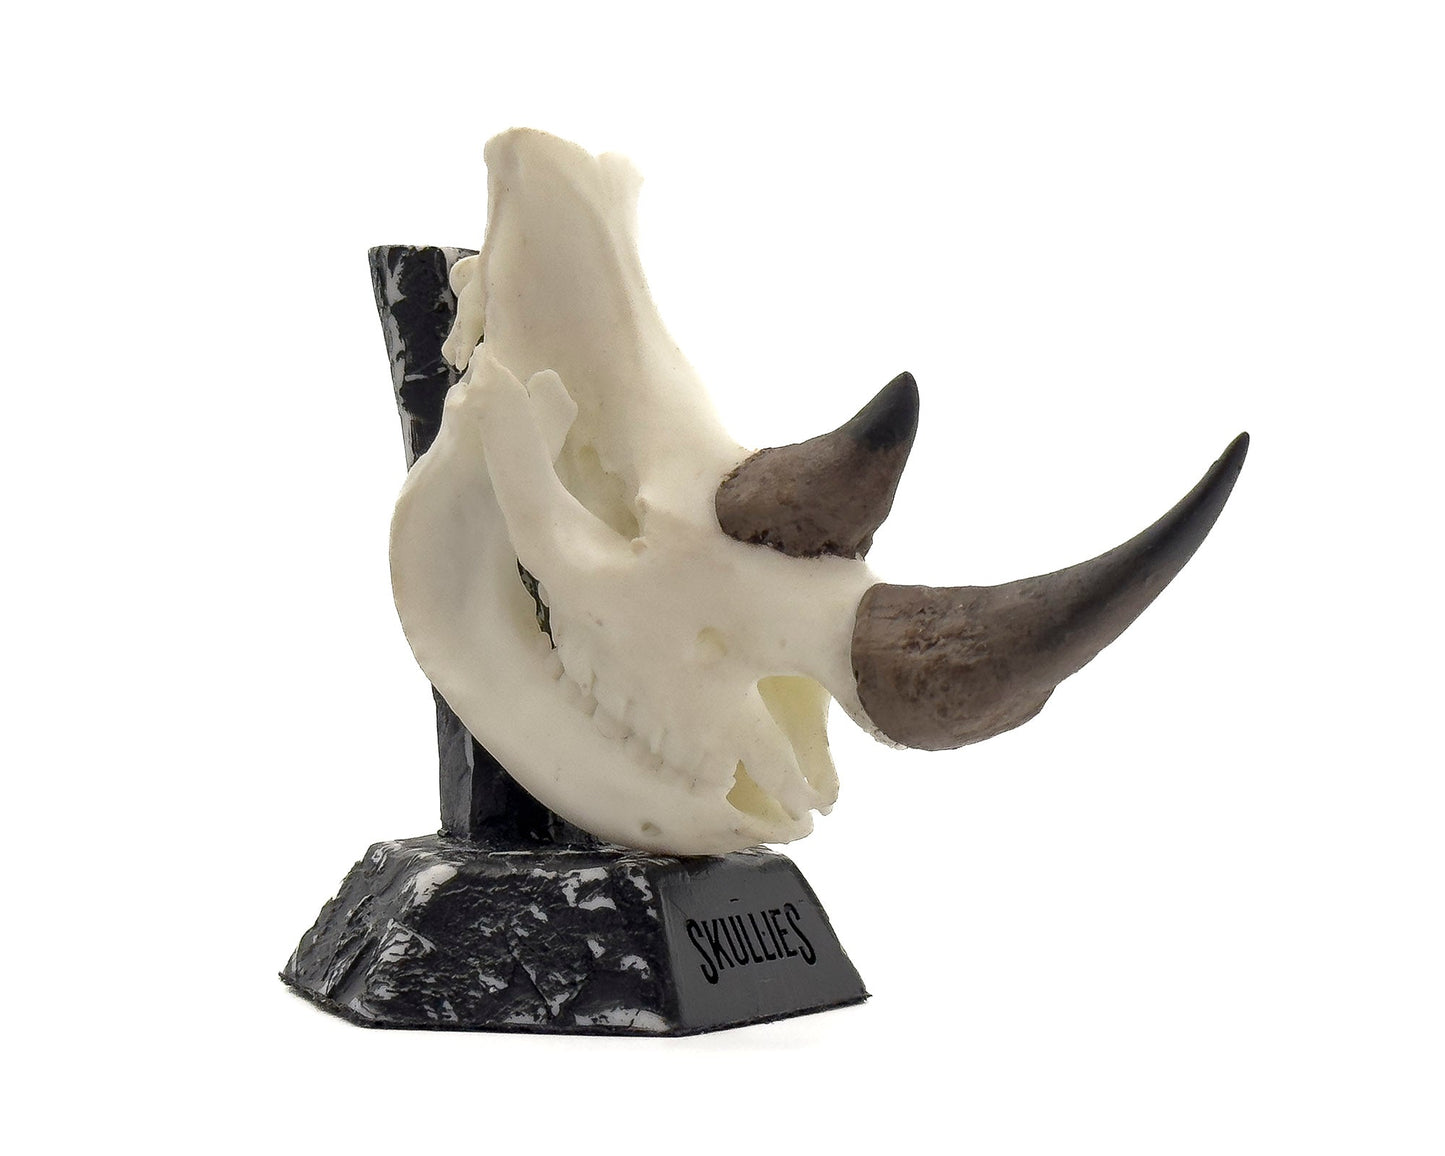 Resin Skullies - Miniature Replica Rhino Skull